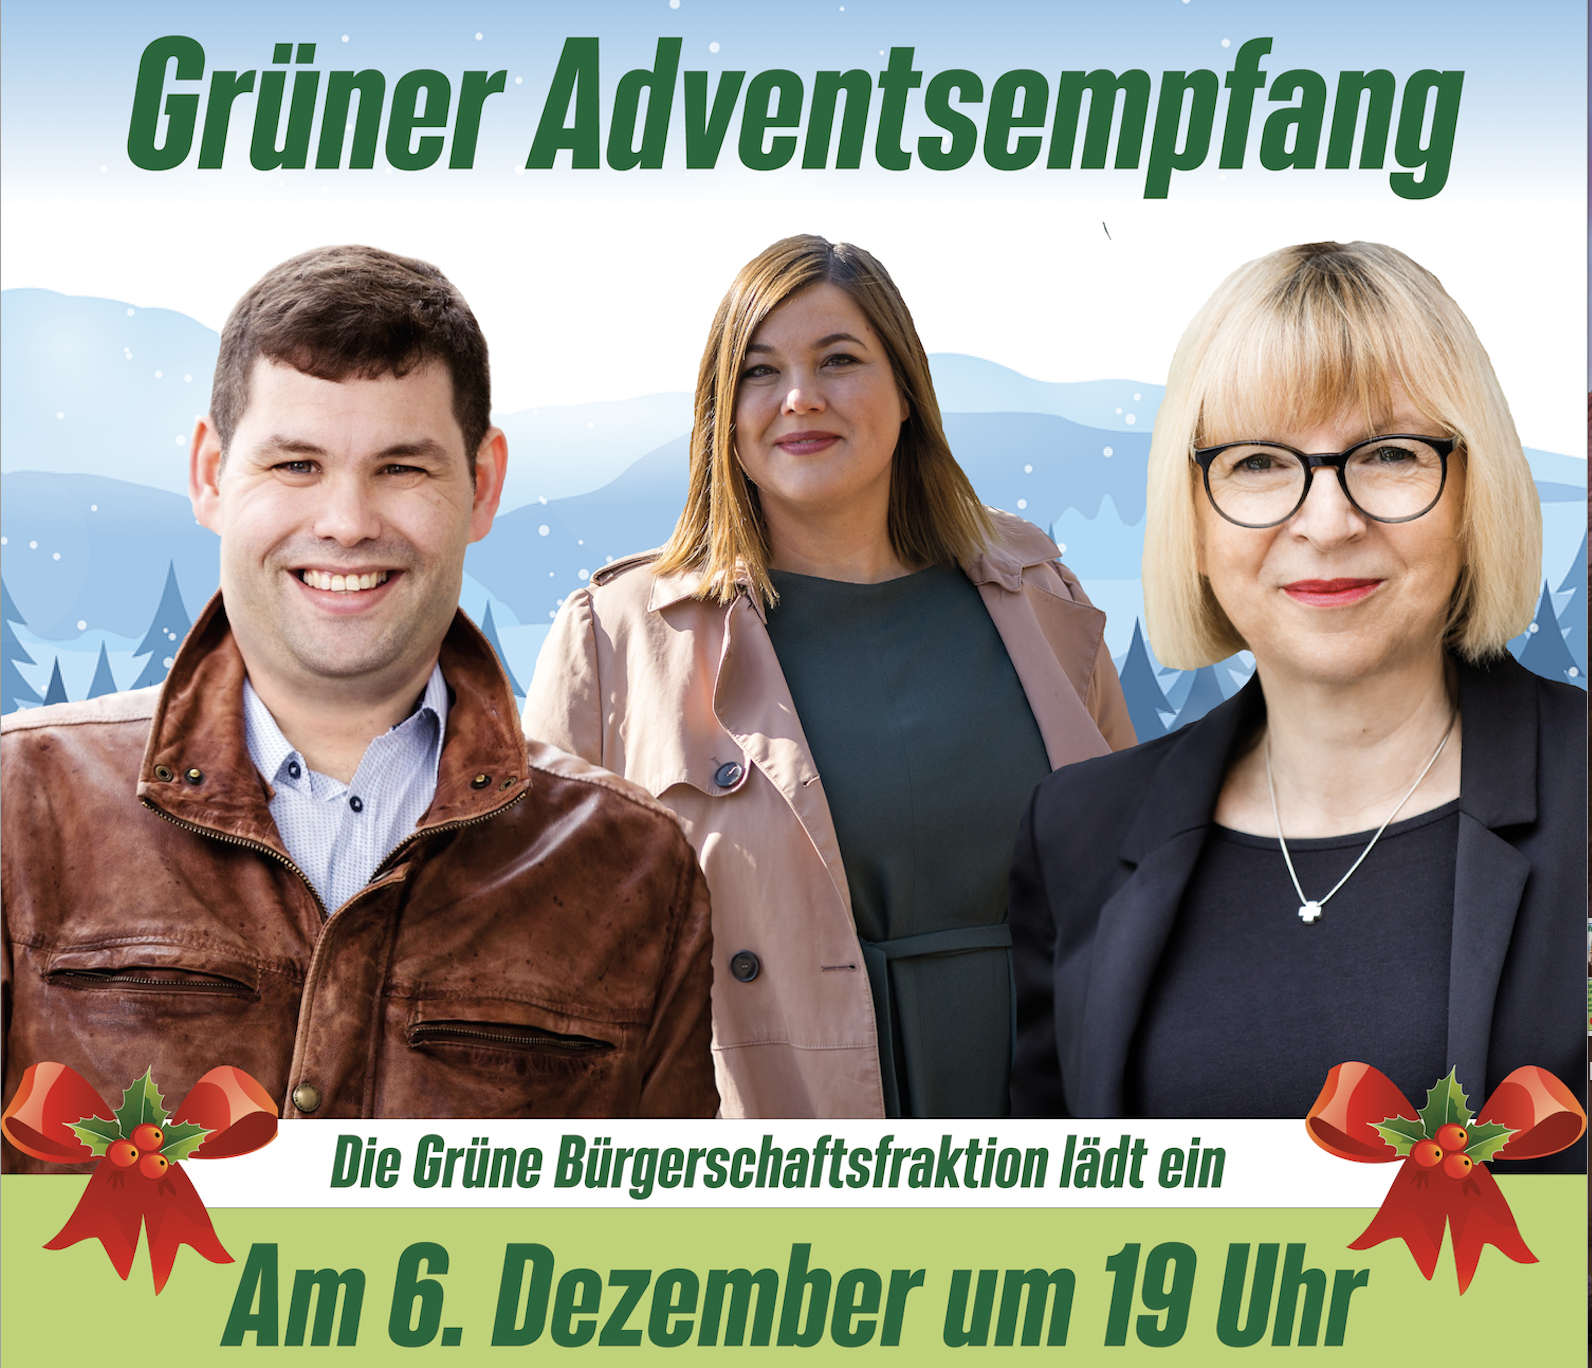 Grüner Adventsempfang am Nikolaustag